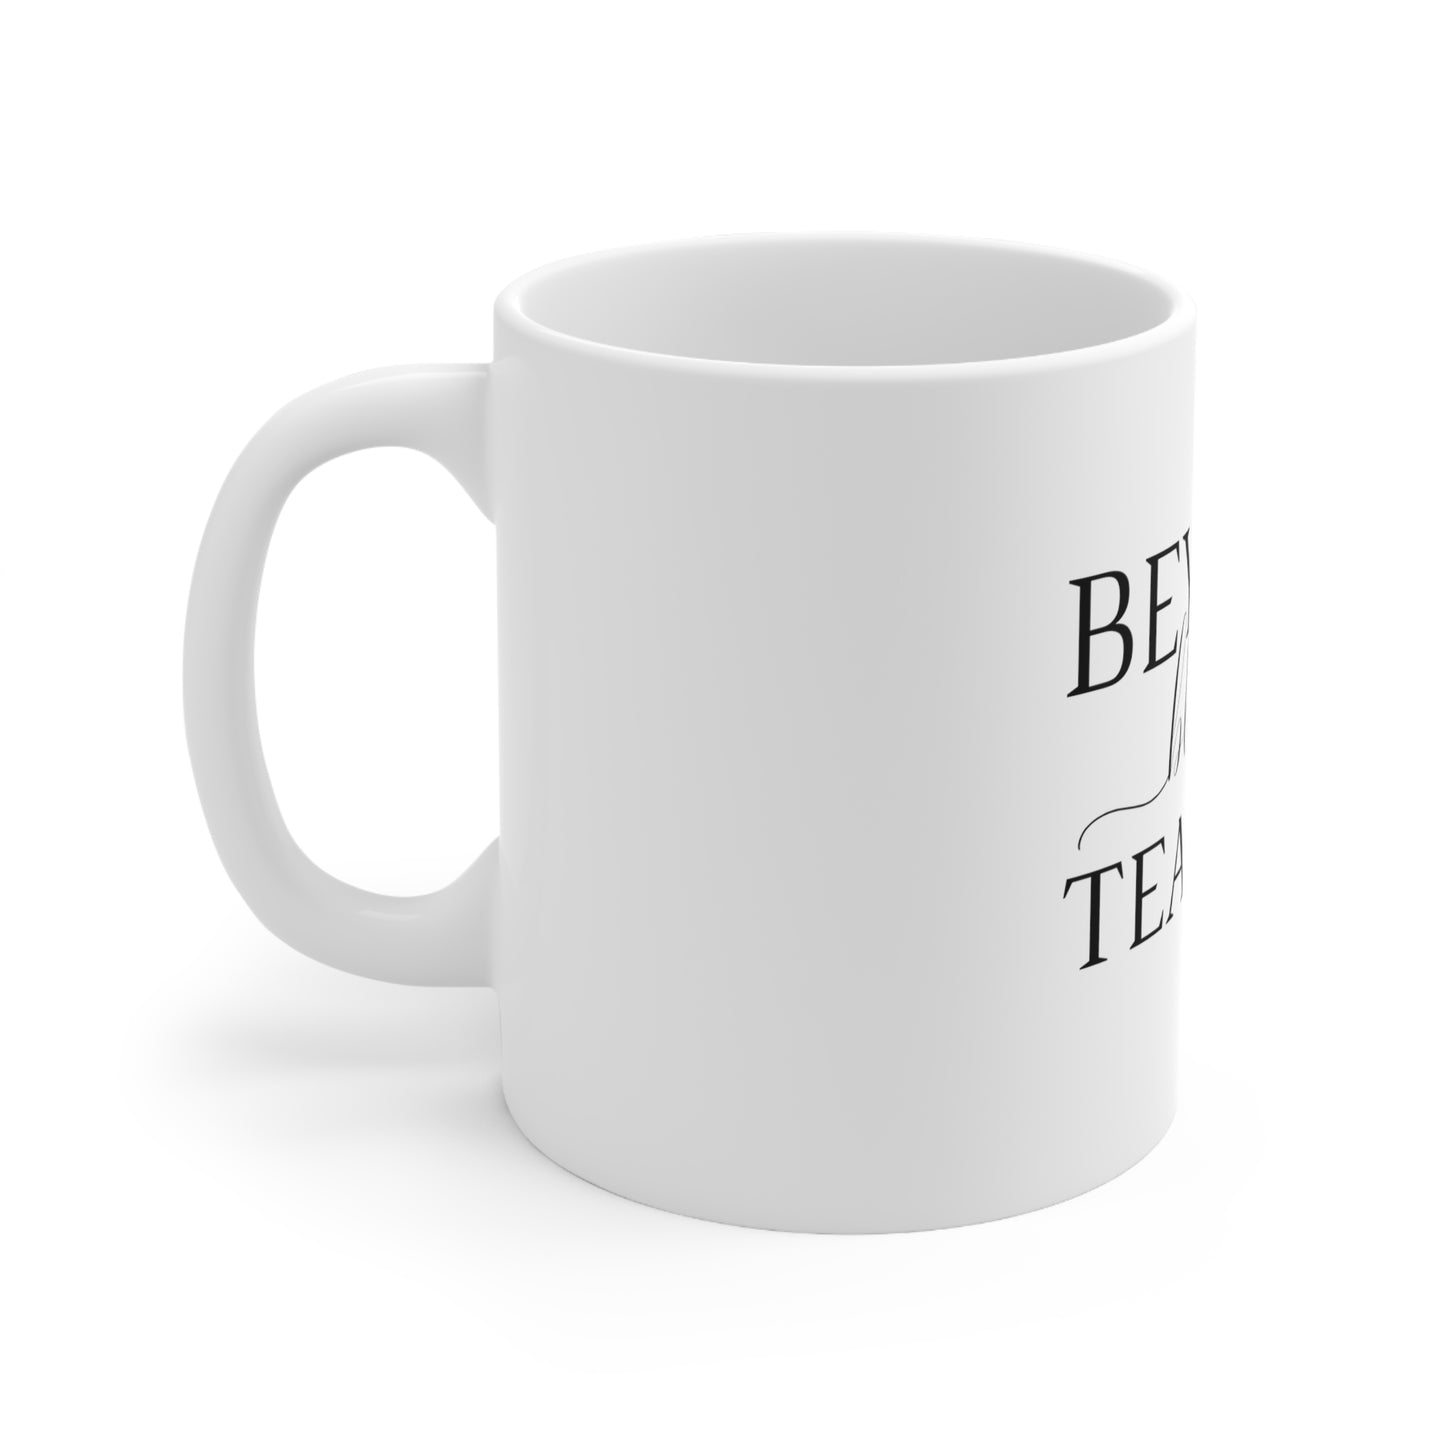 Beyond Blessed Teacher - Plain Ceramic Mug 11oz - Black